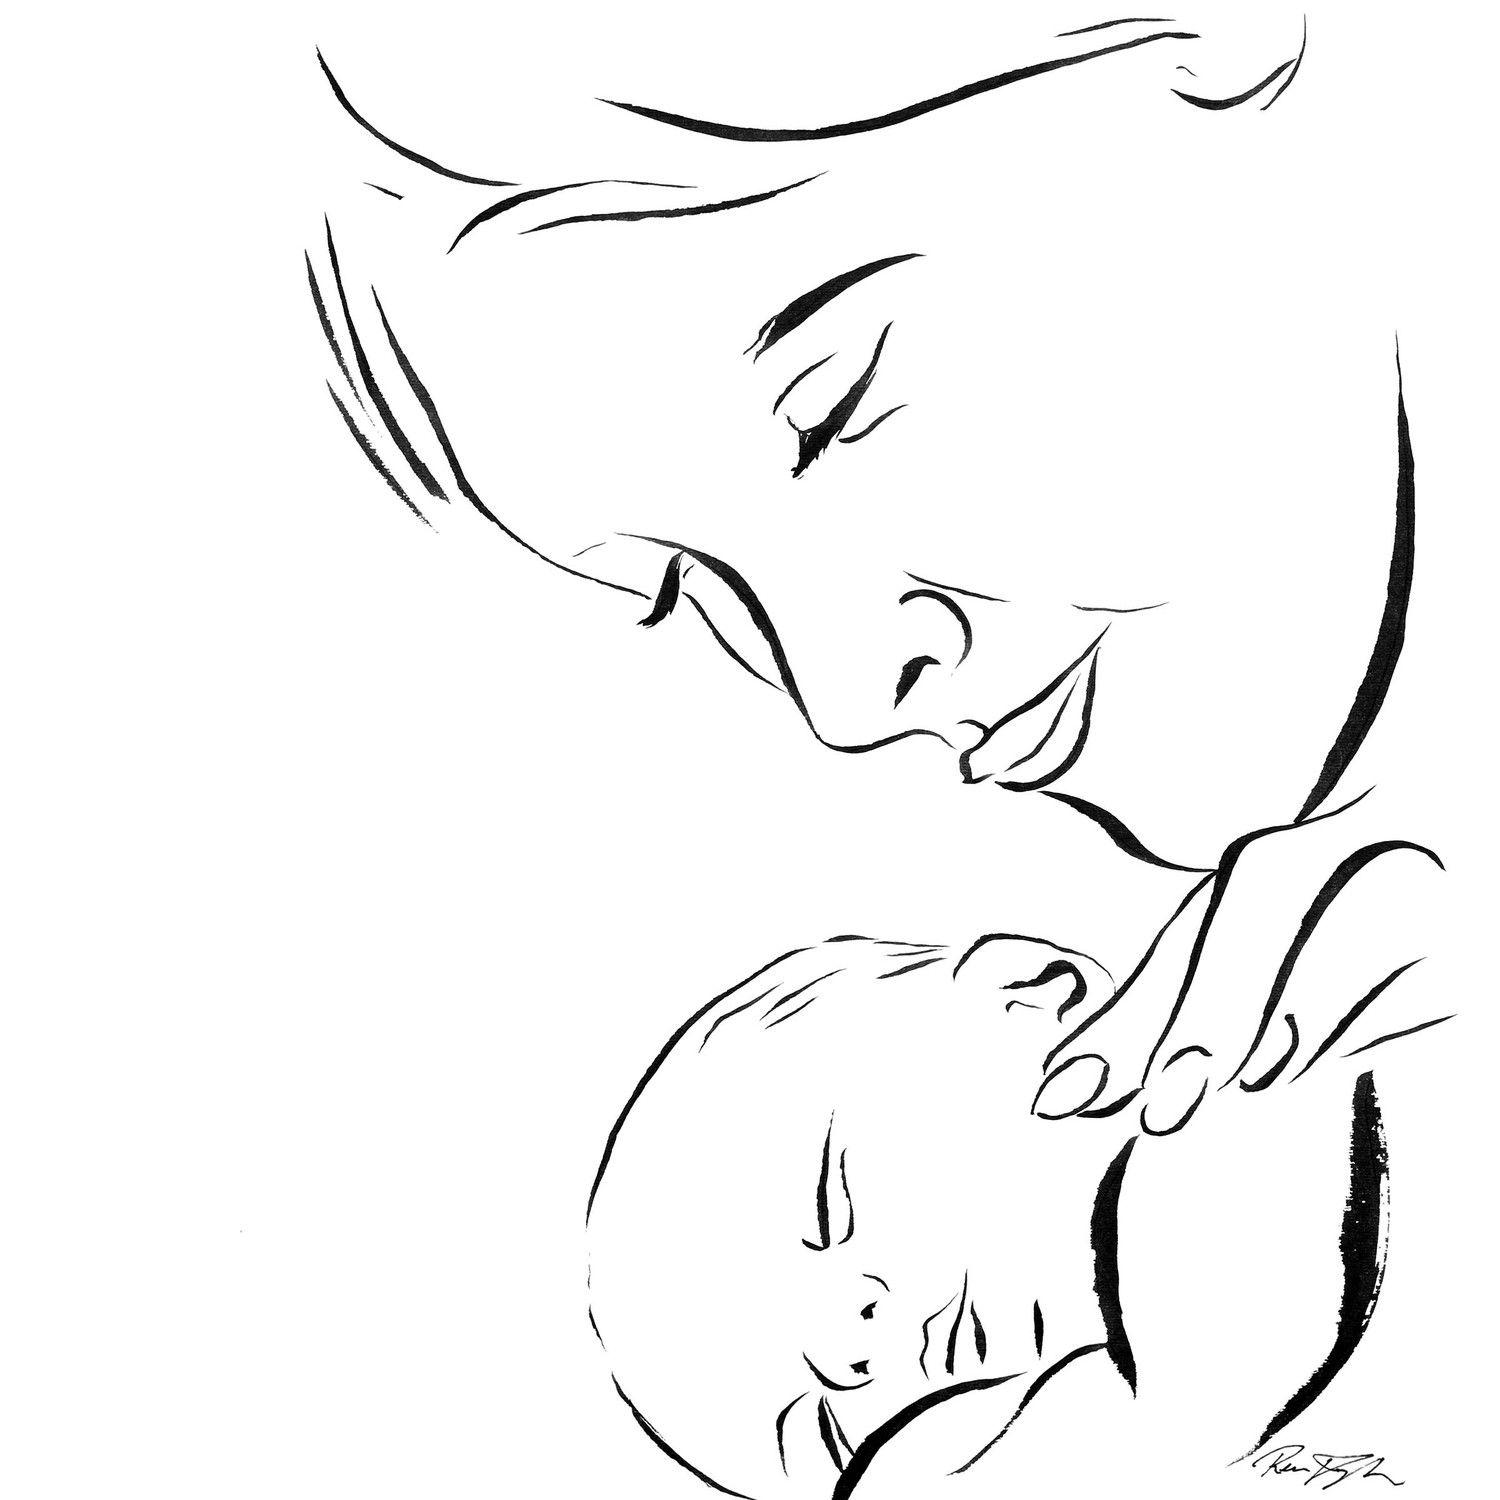 2445 Pencil Sketch Mother Daughter Images Stock Photos  Vectors   Shutterstock